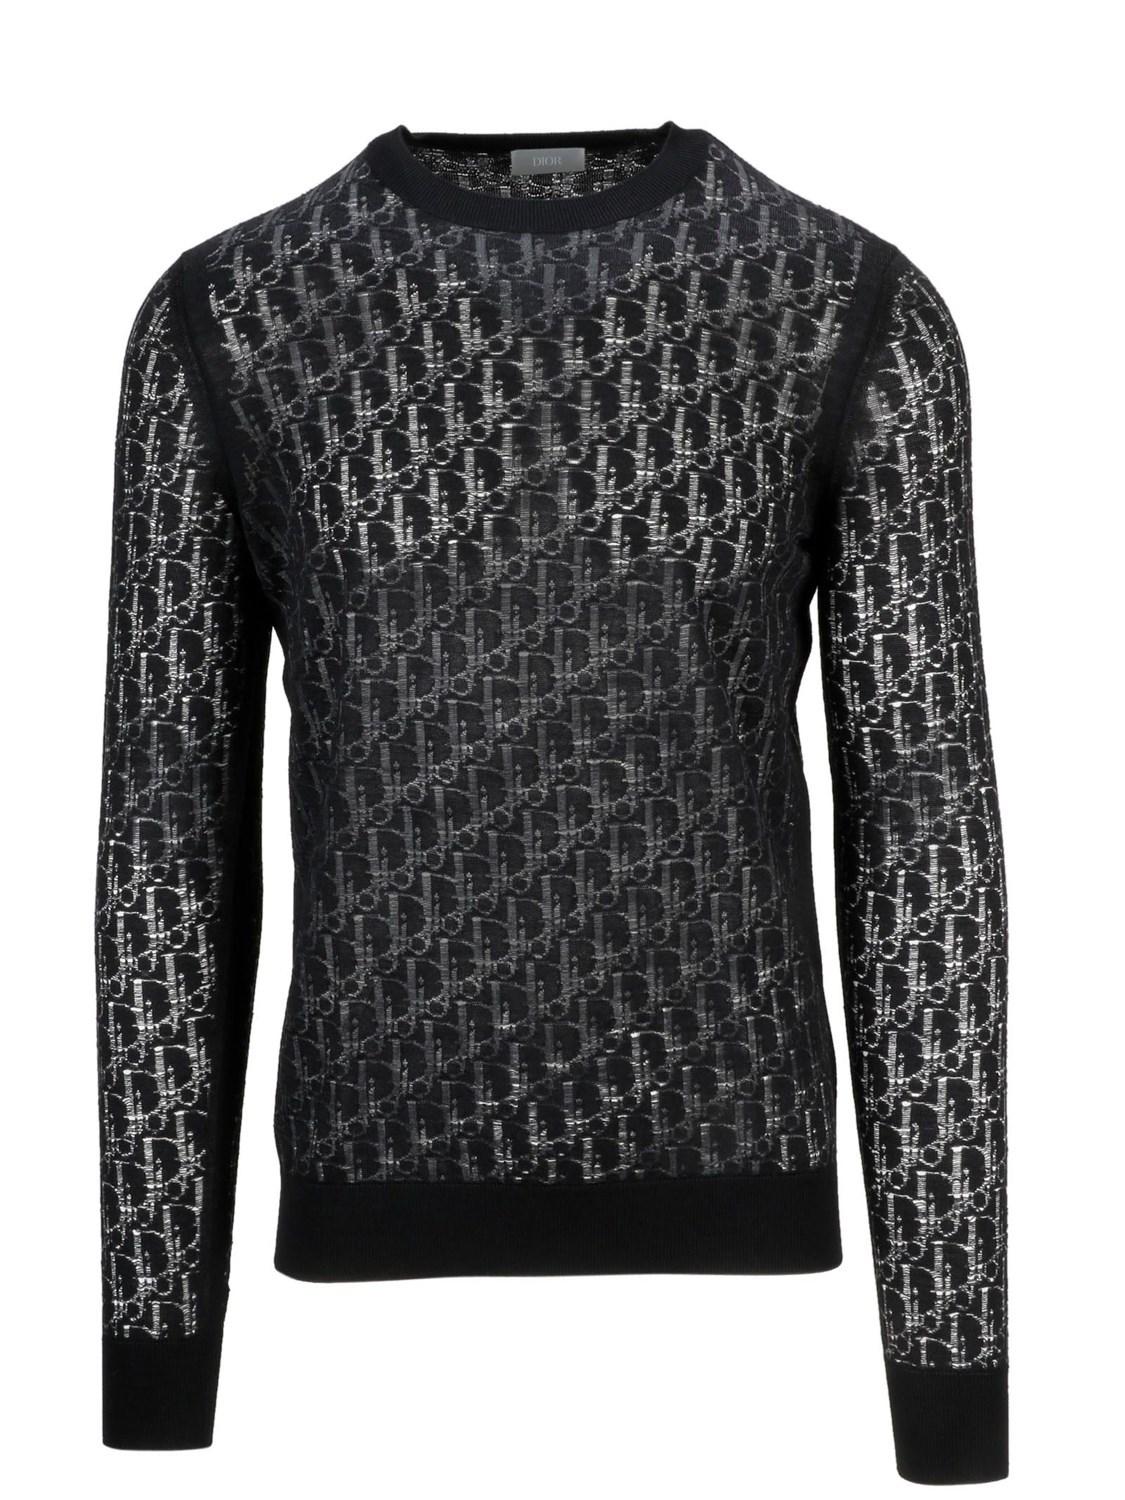 Lyst - Dior Men's 923m620at936900 Black Wool Sweater in Black for Men